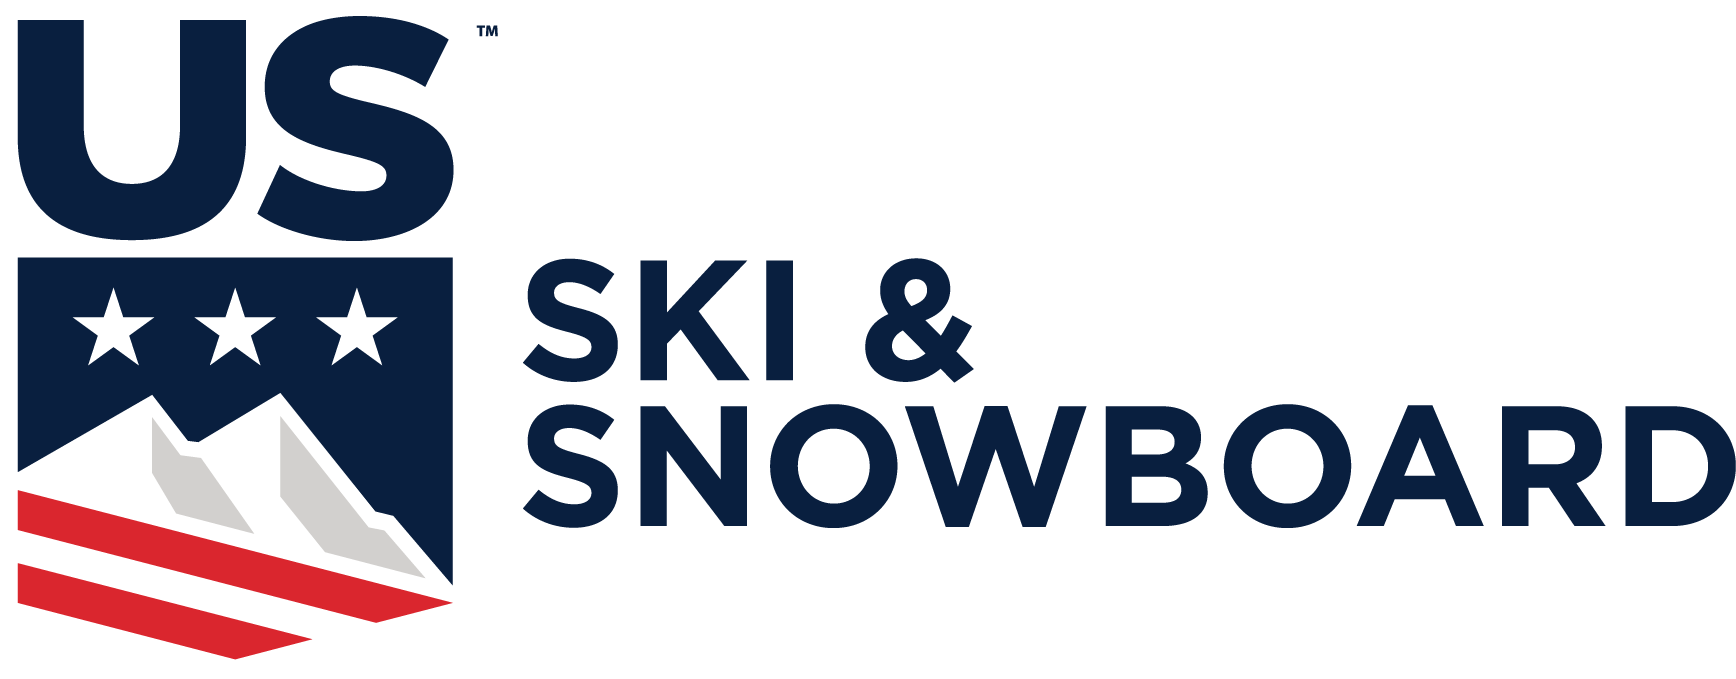 US Ski & Snowboard.png